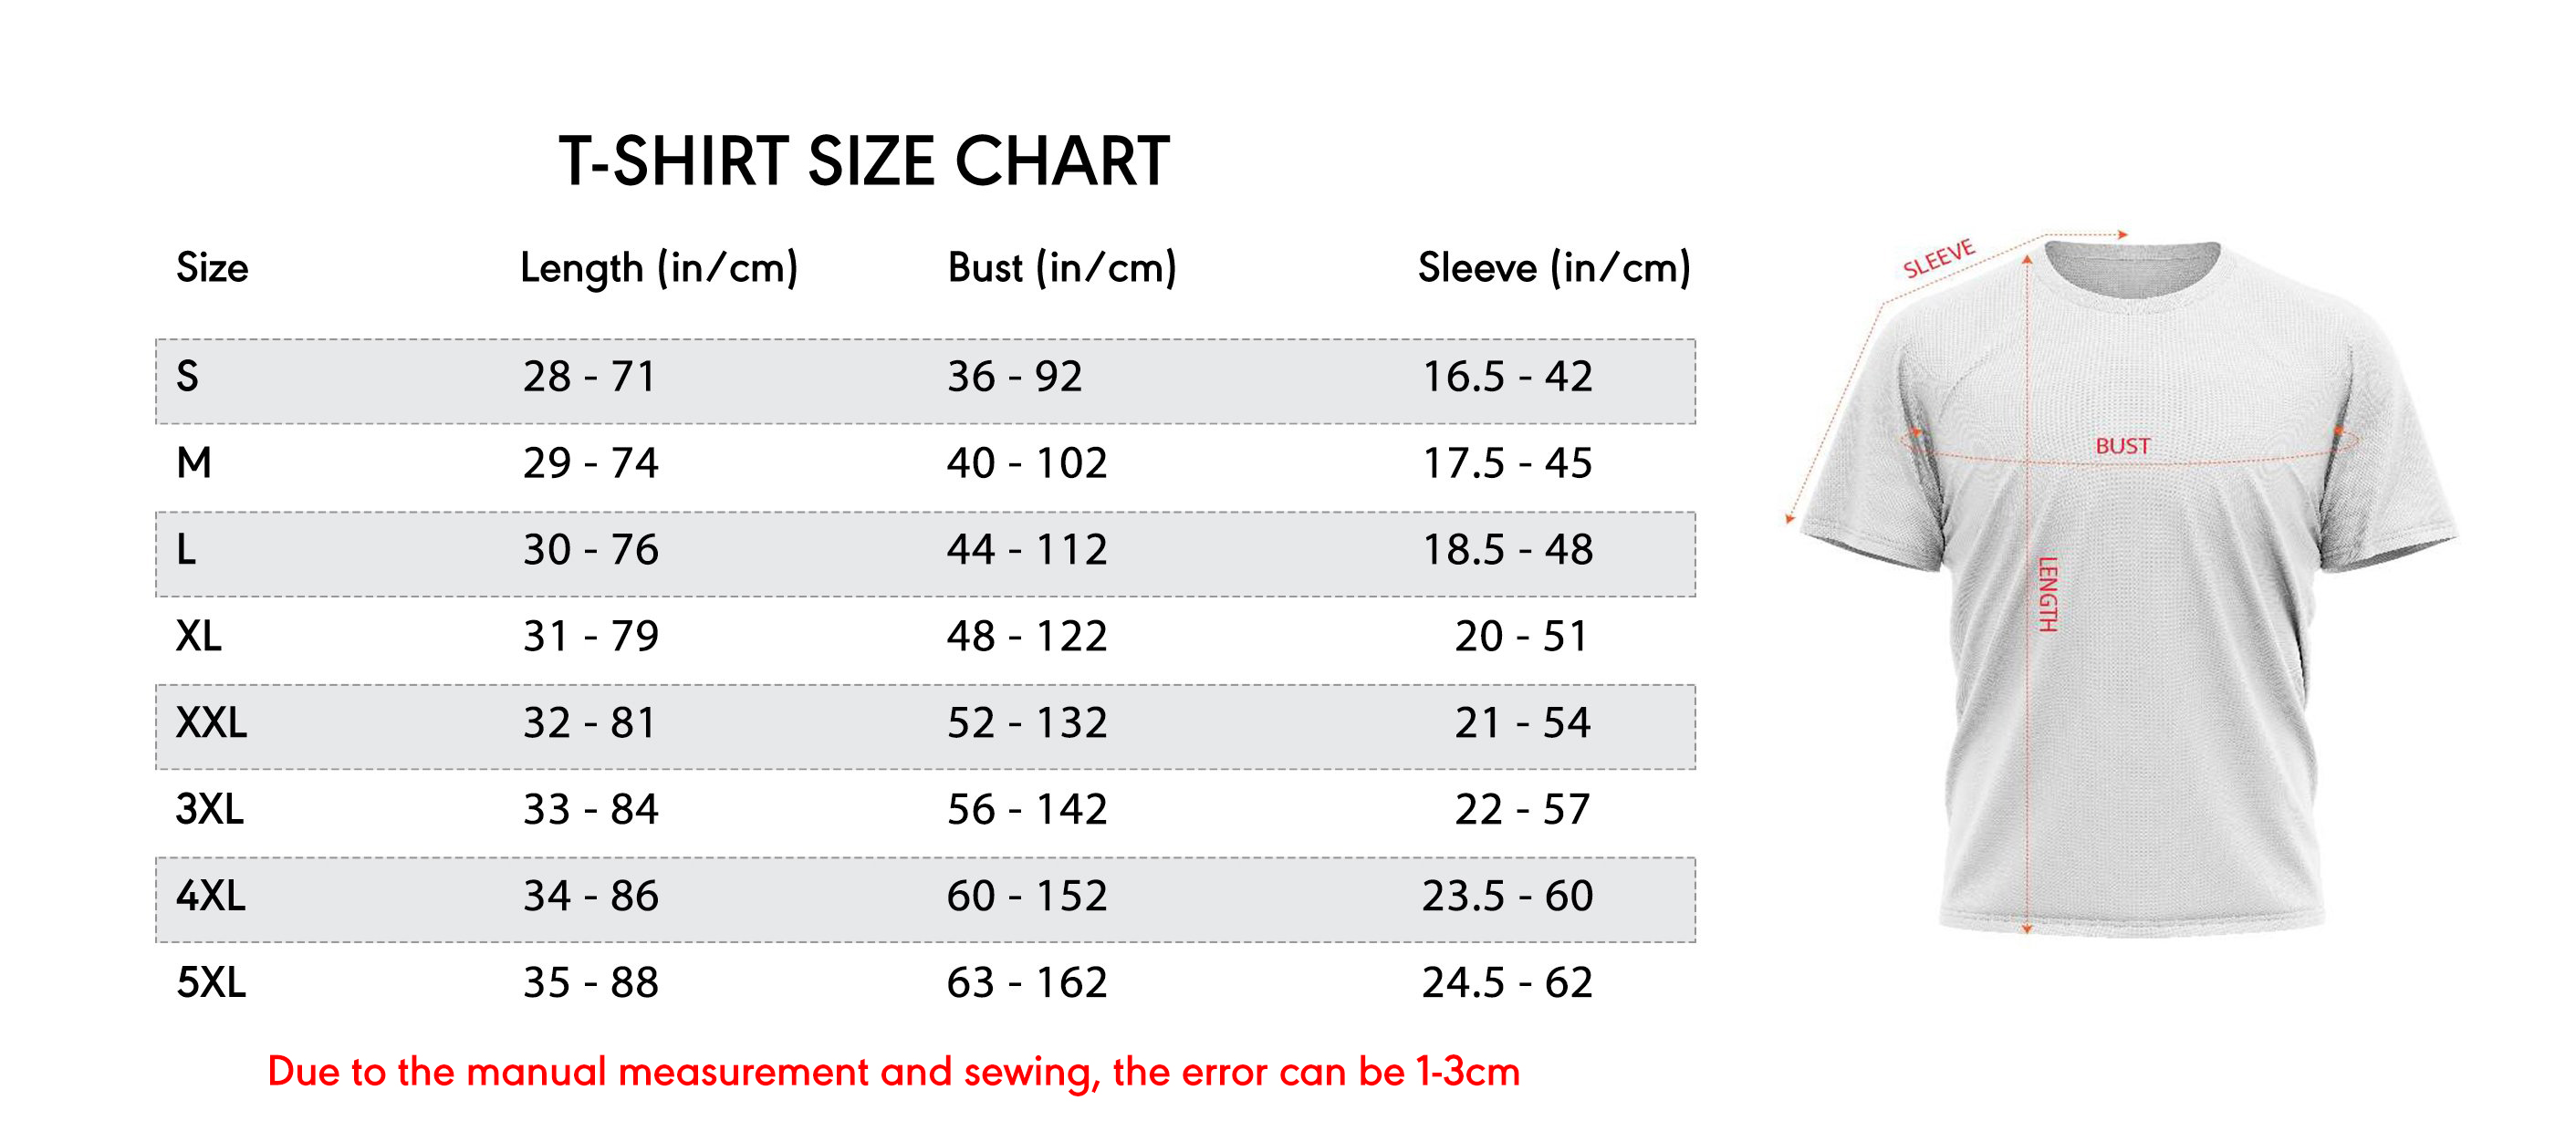 Lv Size Chart Clothes  semashowcom